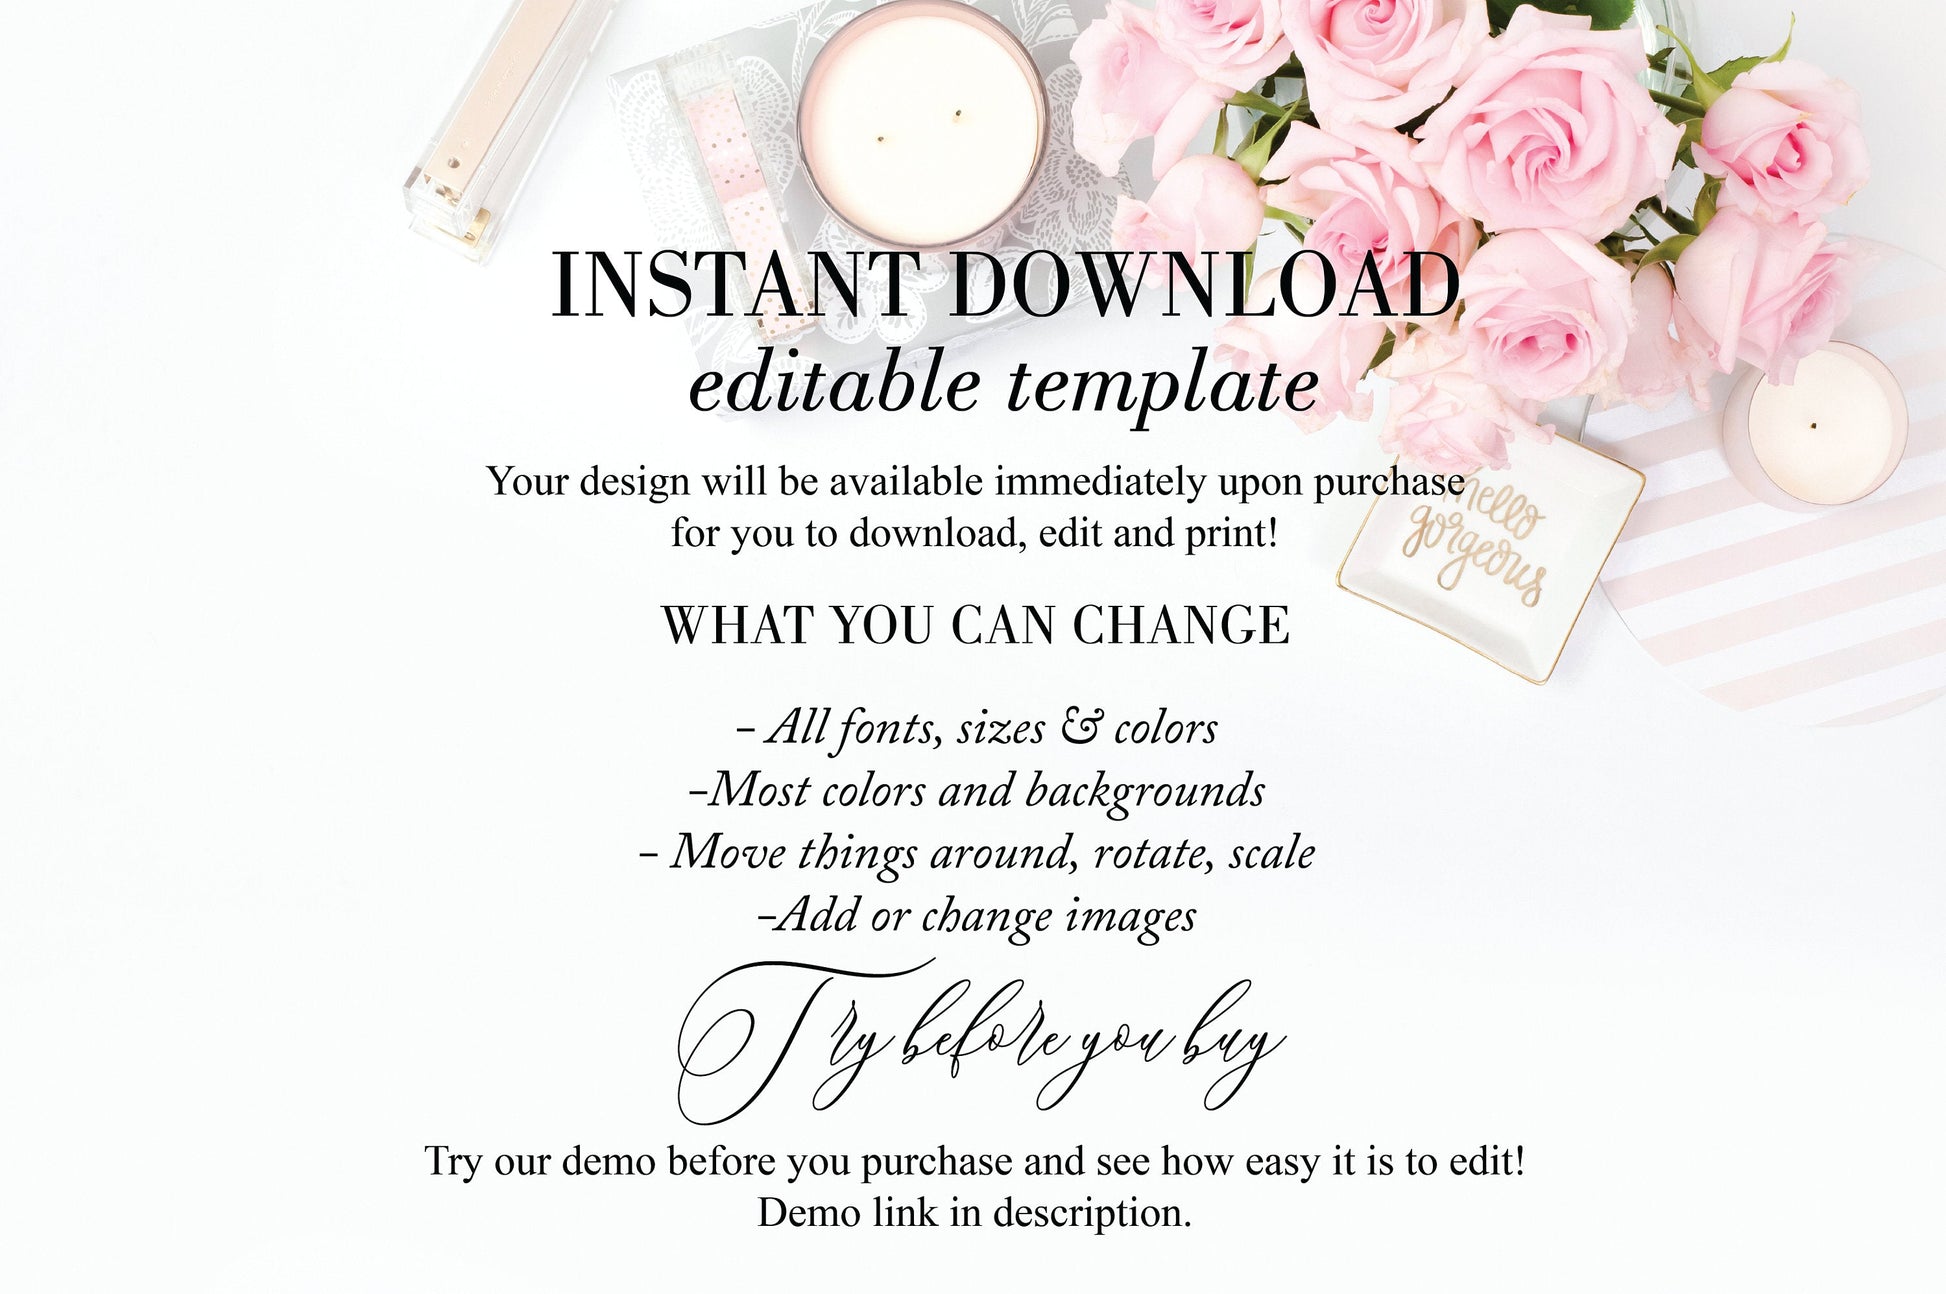 Wedding Invitation Template Instant Download Templett Printable Wedding Editable - Amalia WEDDING INVITATIONS SAVVY PAPER CO